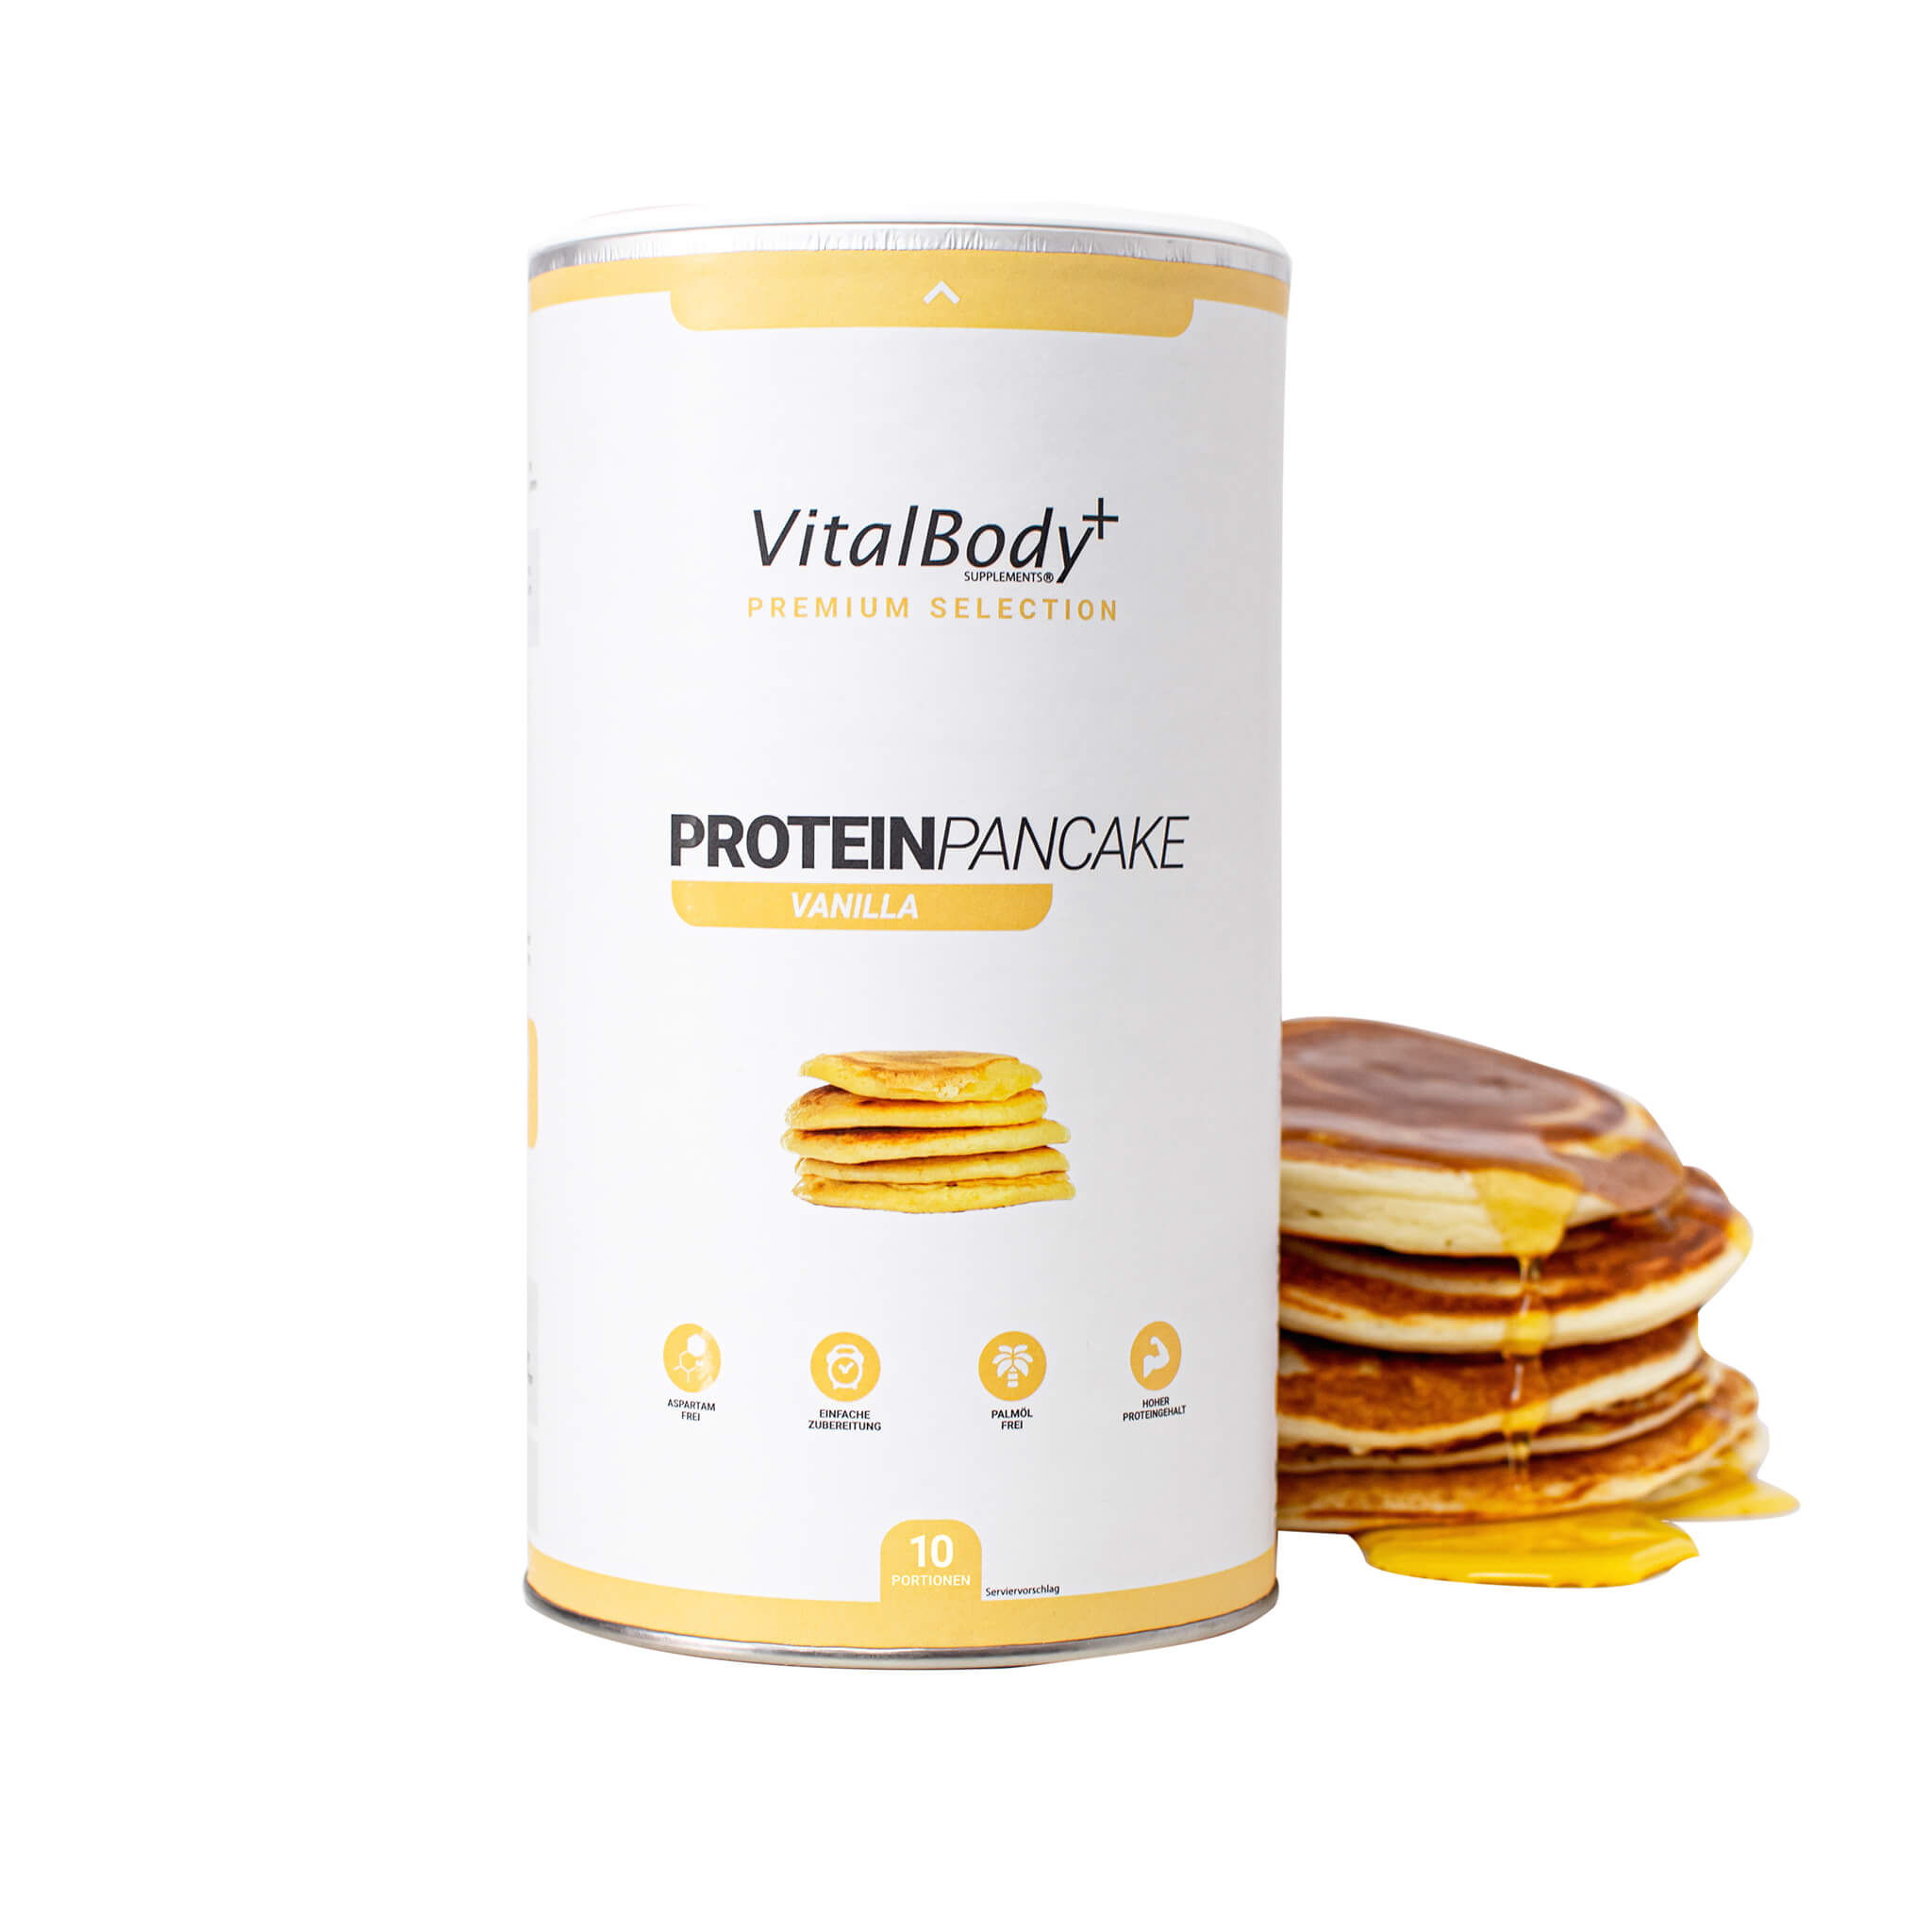 Protein Pancake - VitalBodyPLUS.de